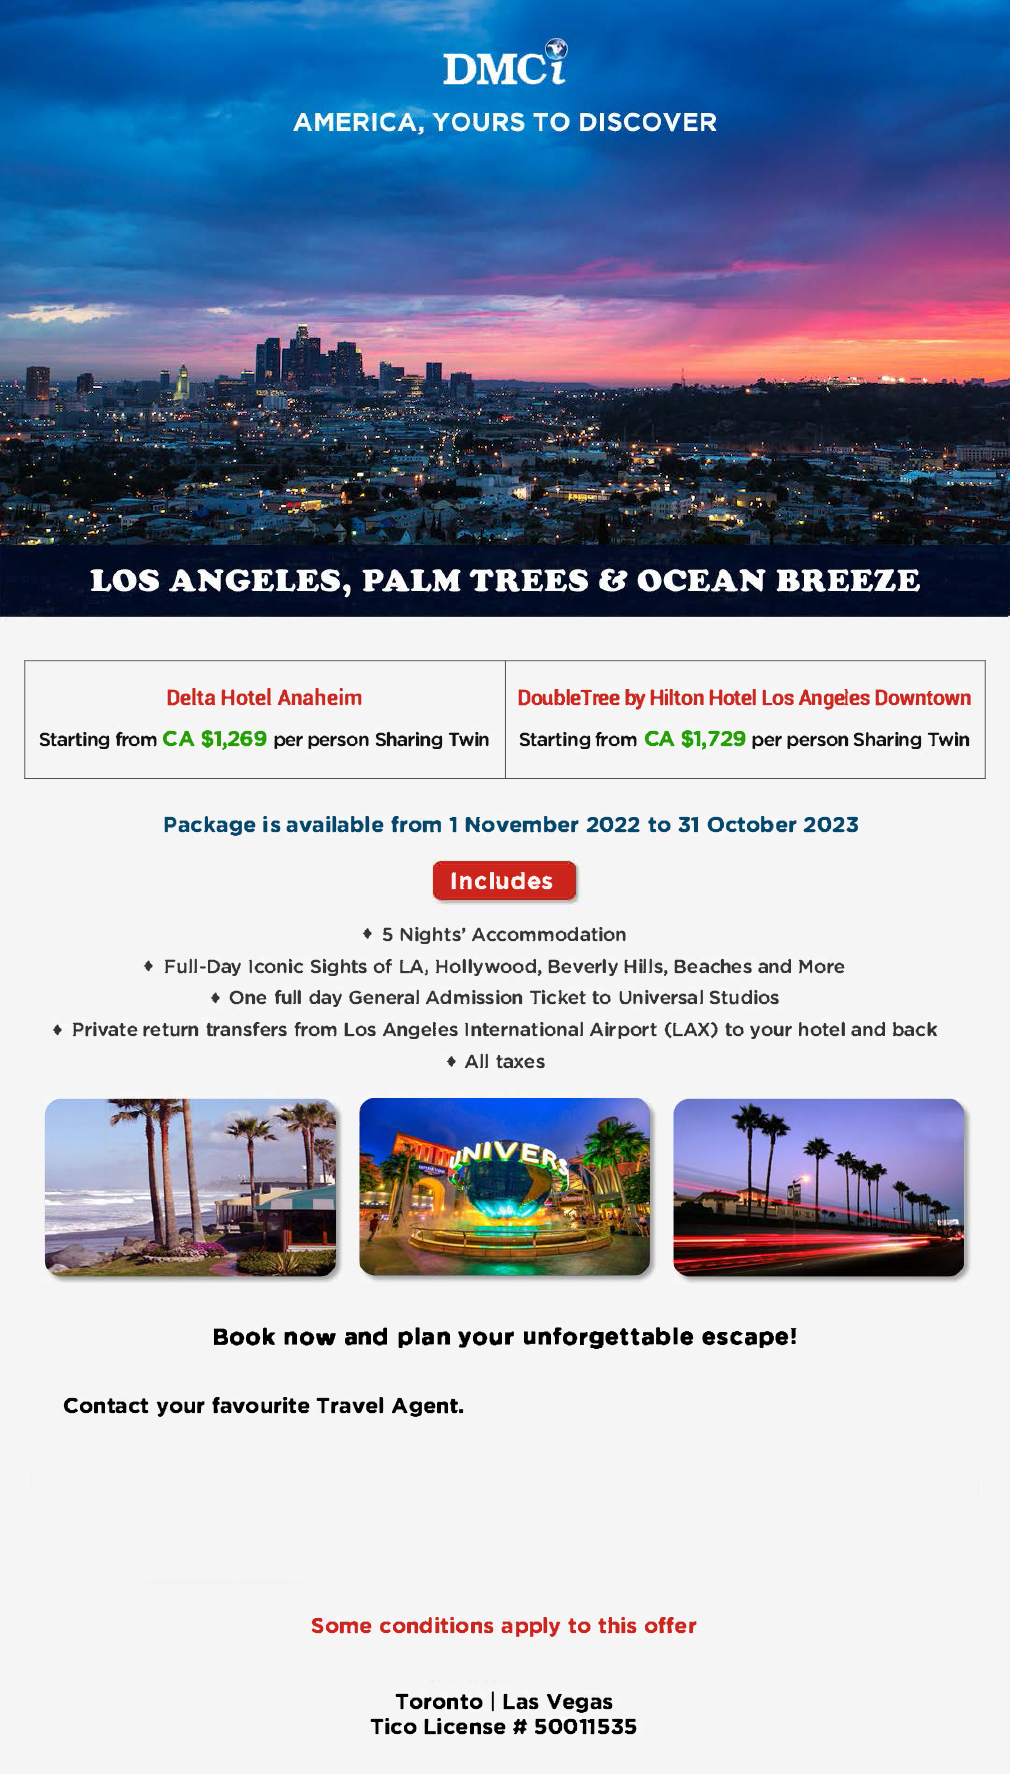 Los Angeles, Palm Trees & Ocean Breeze